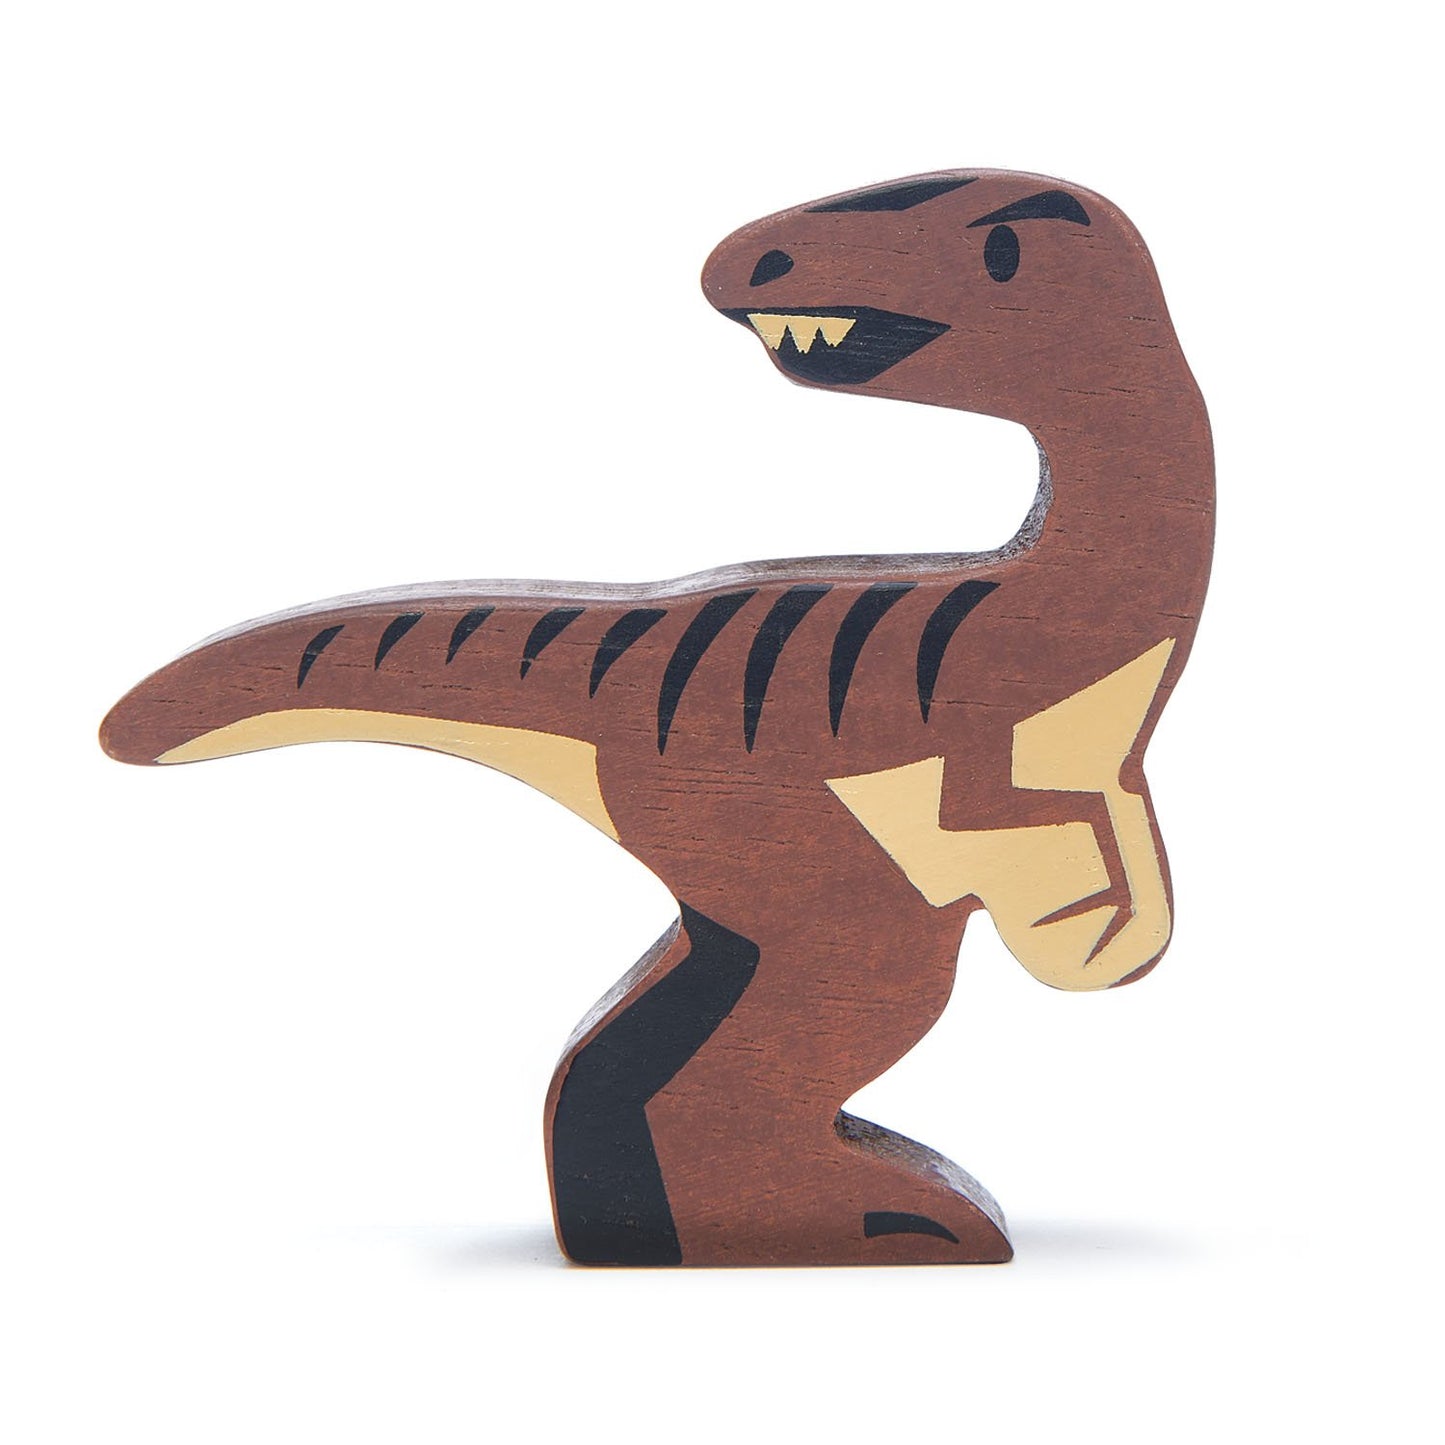 Front view of wooden Velociraptor figurine